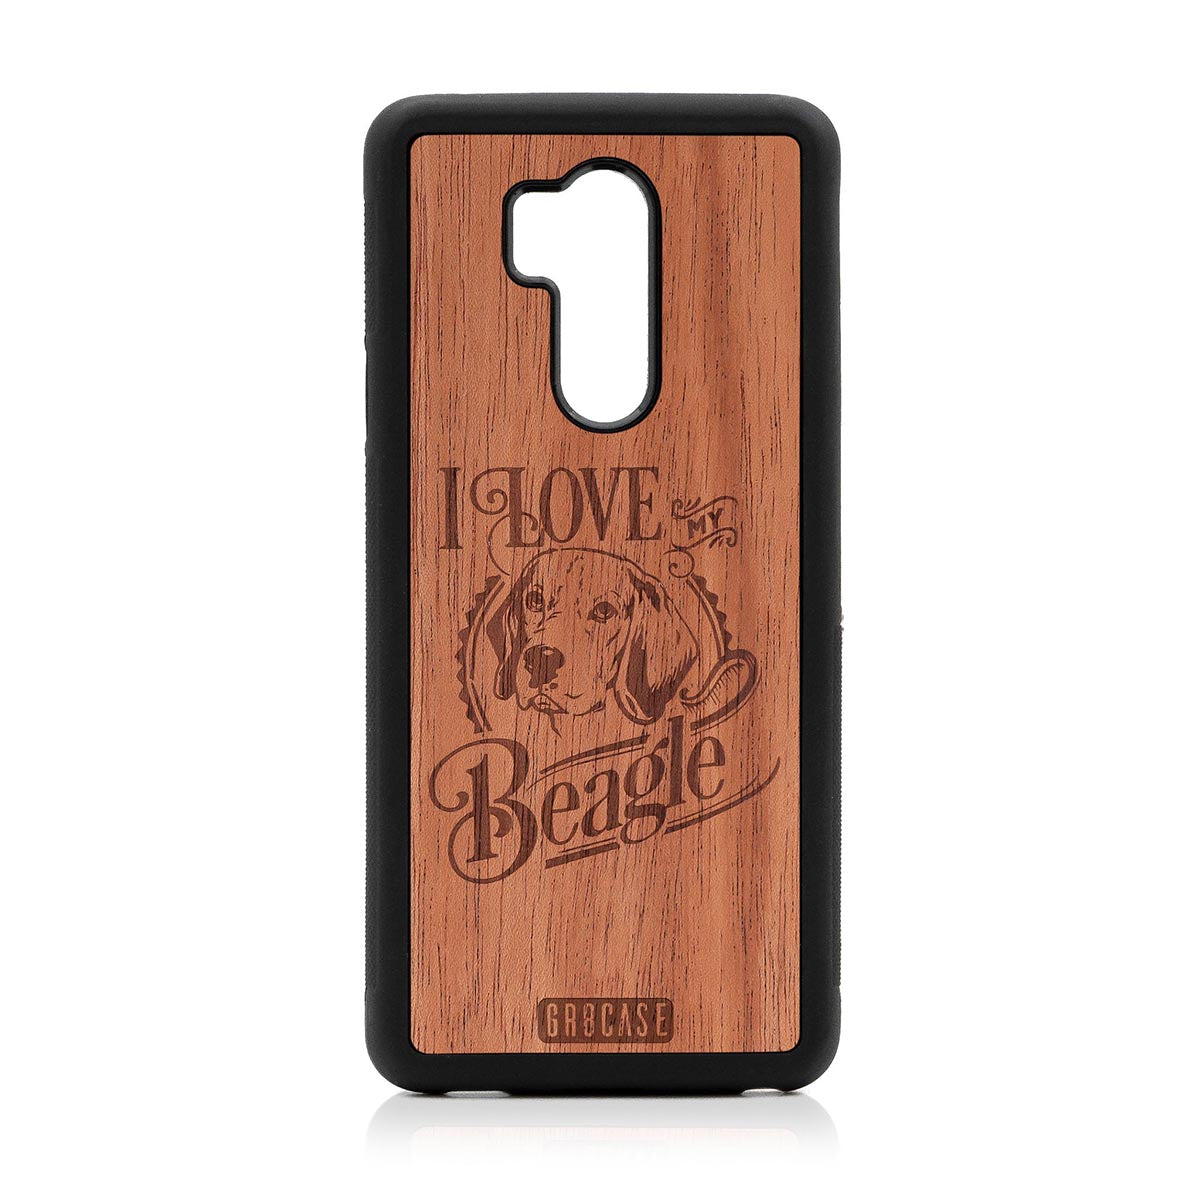 I Love My Beagle Design Wood Case LG G7 ThinQ by GR8CASE